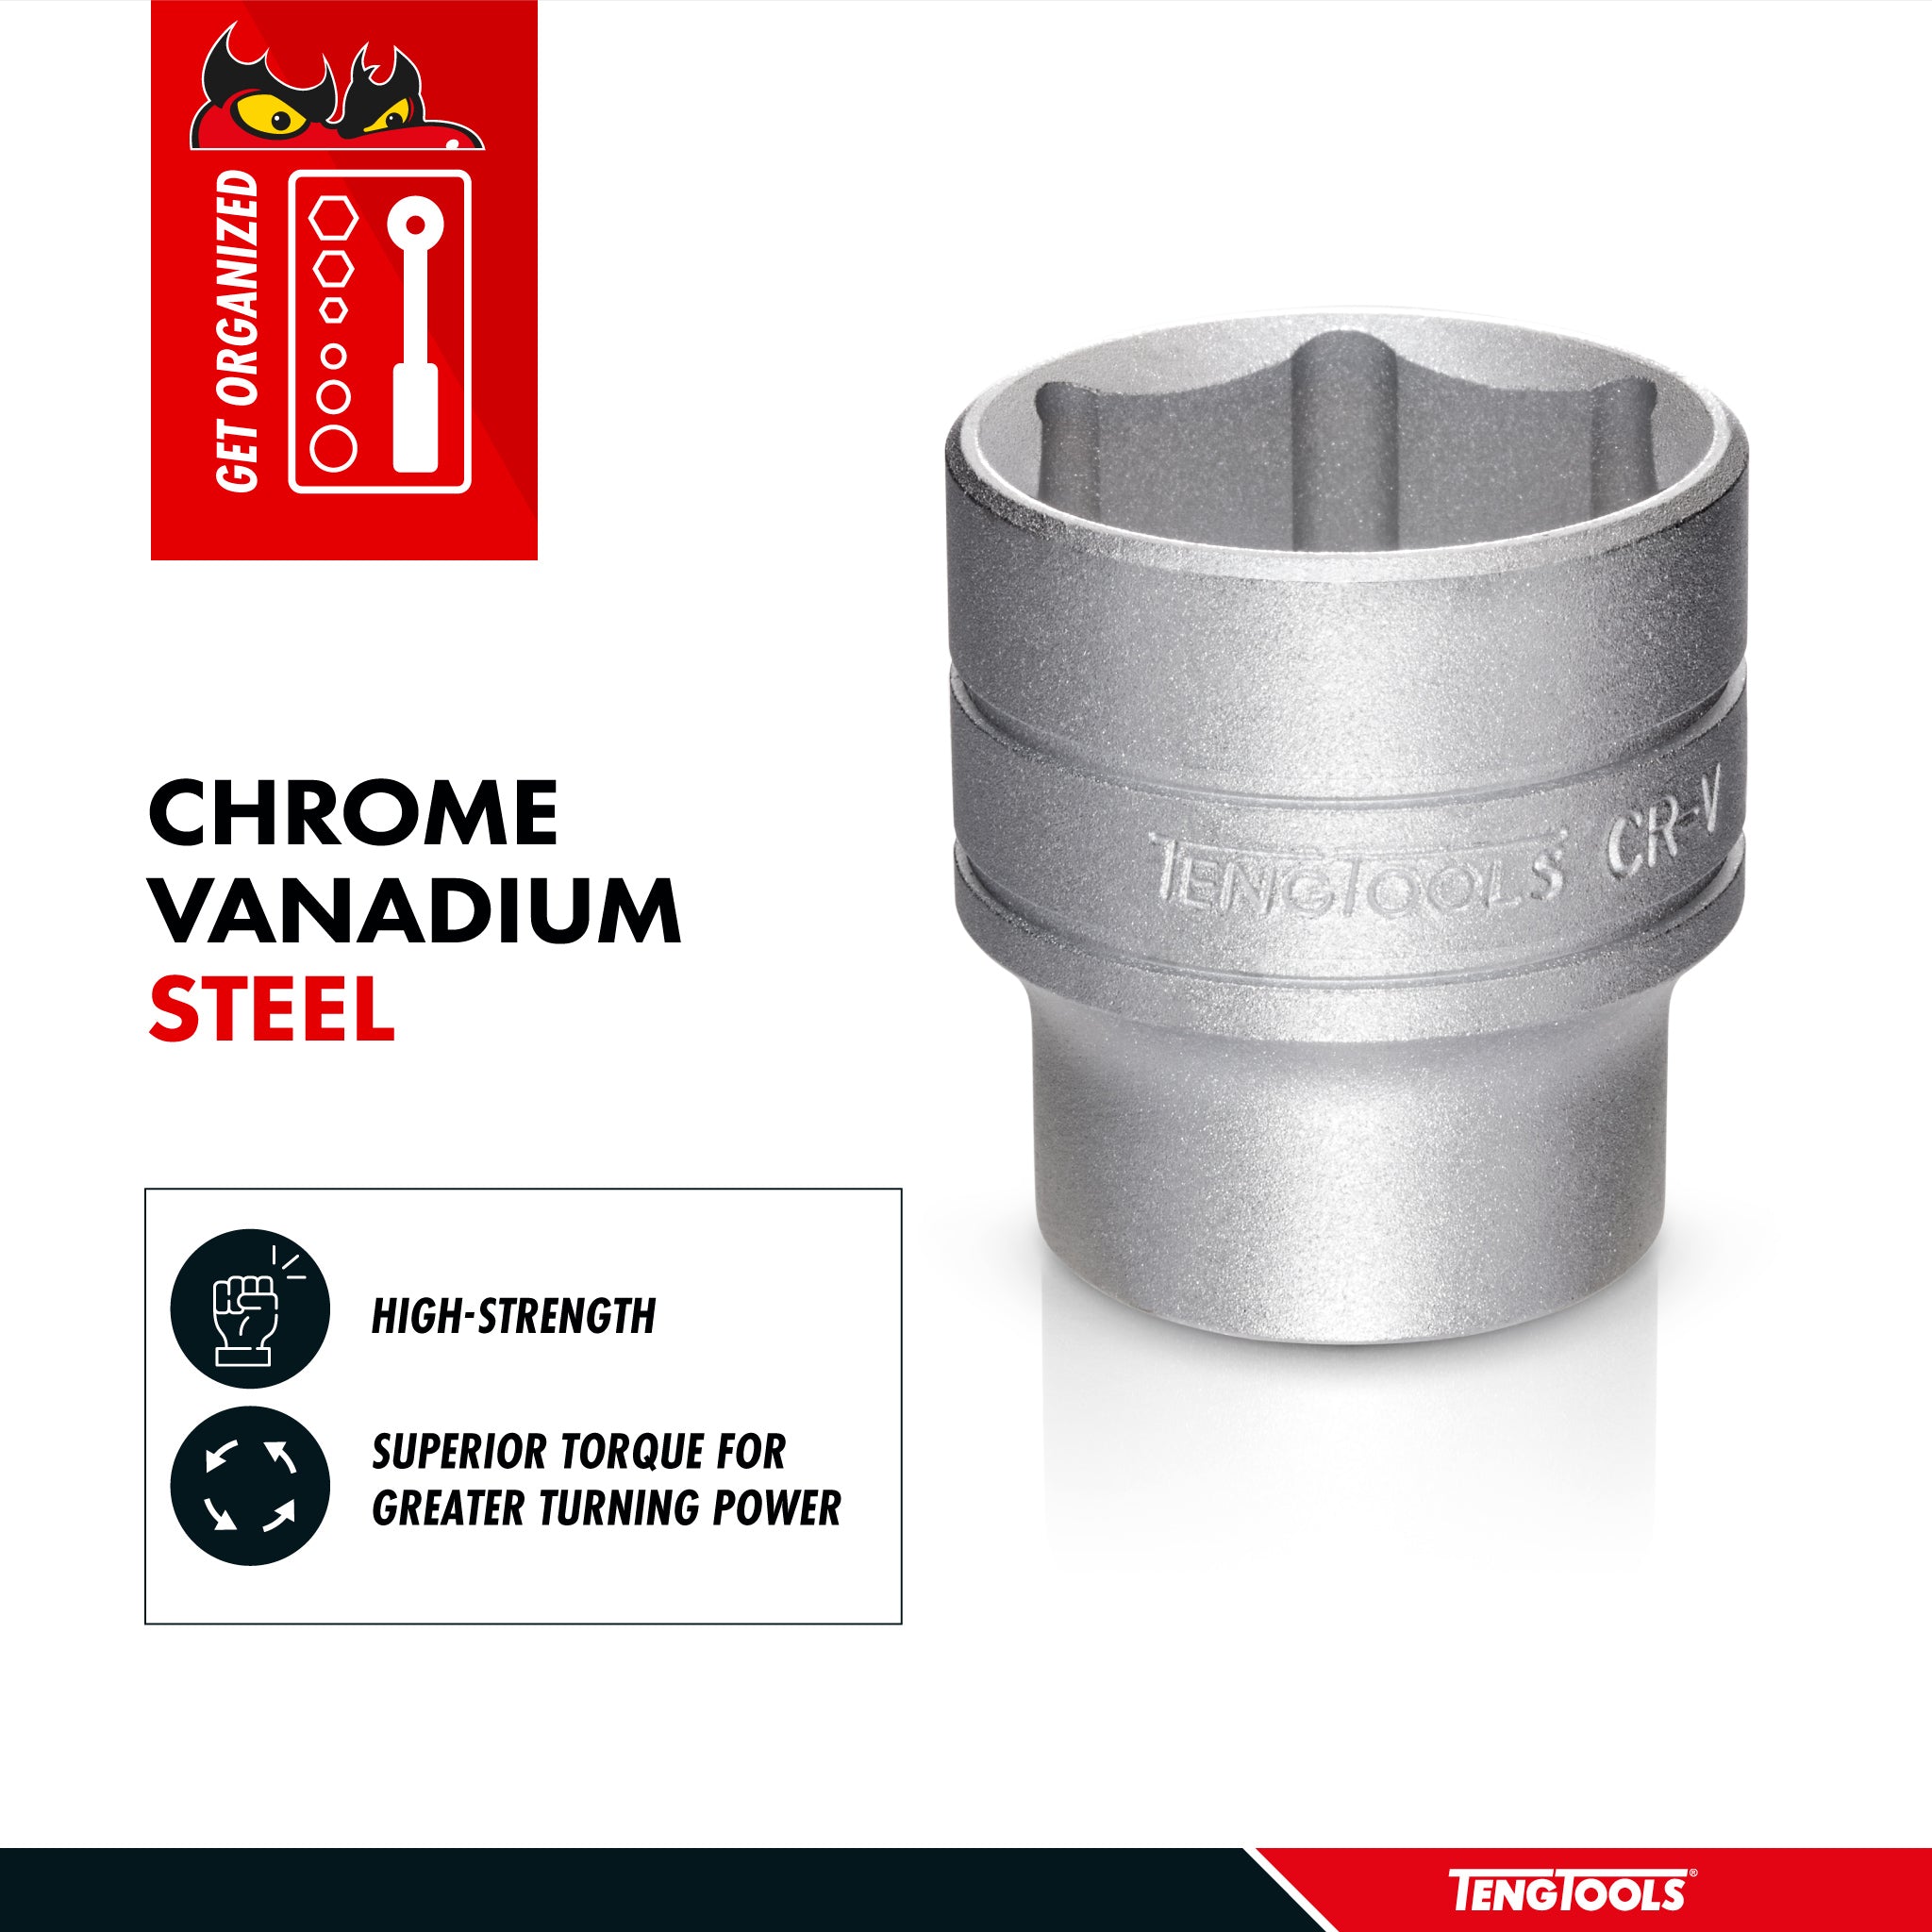 Teng Tools 3/8 Inch Drive 6 Point Metric Shallow Chrome Vanadium Sockets - 9mm